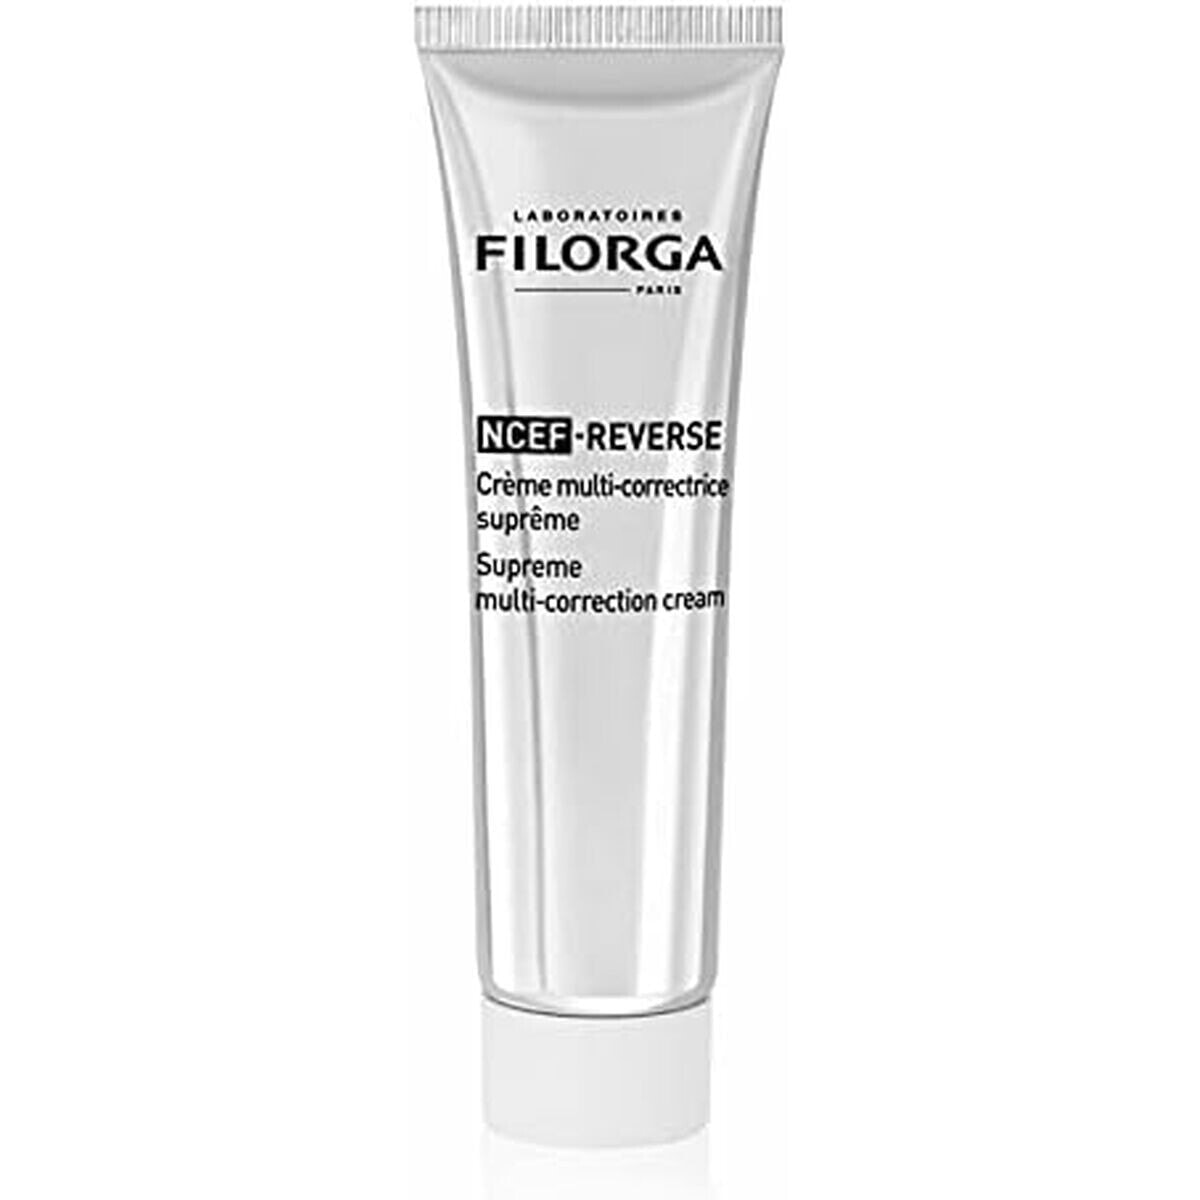 Антивозрастной крем Filorga NCEF-REVERSE supreme multi-correction 30 ml